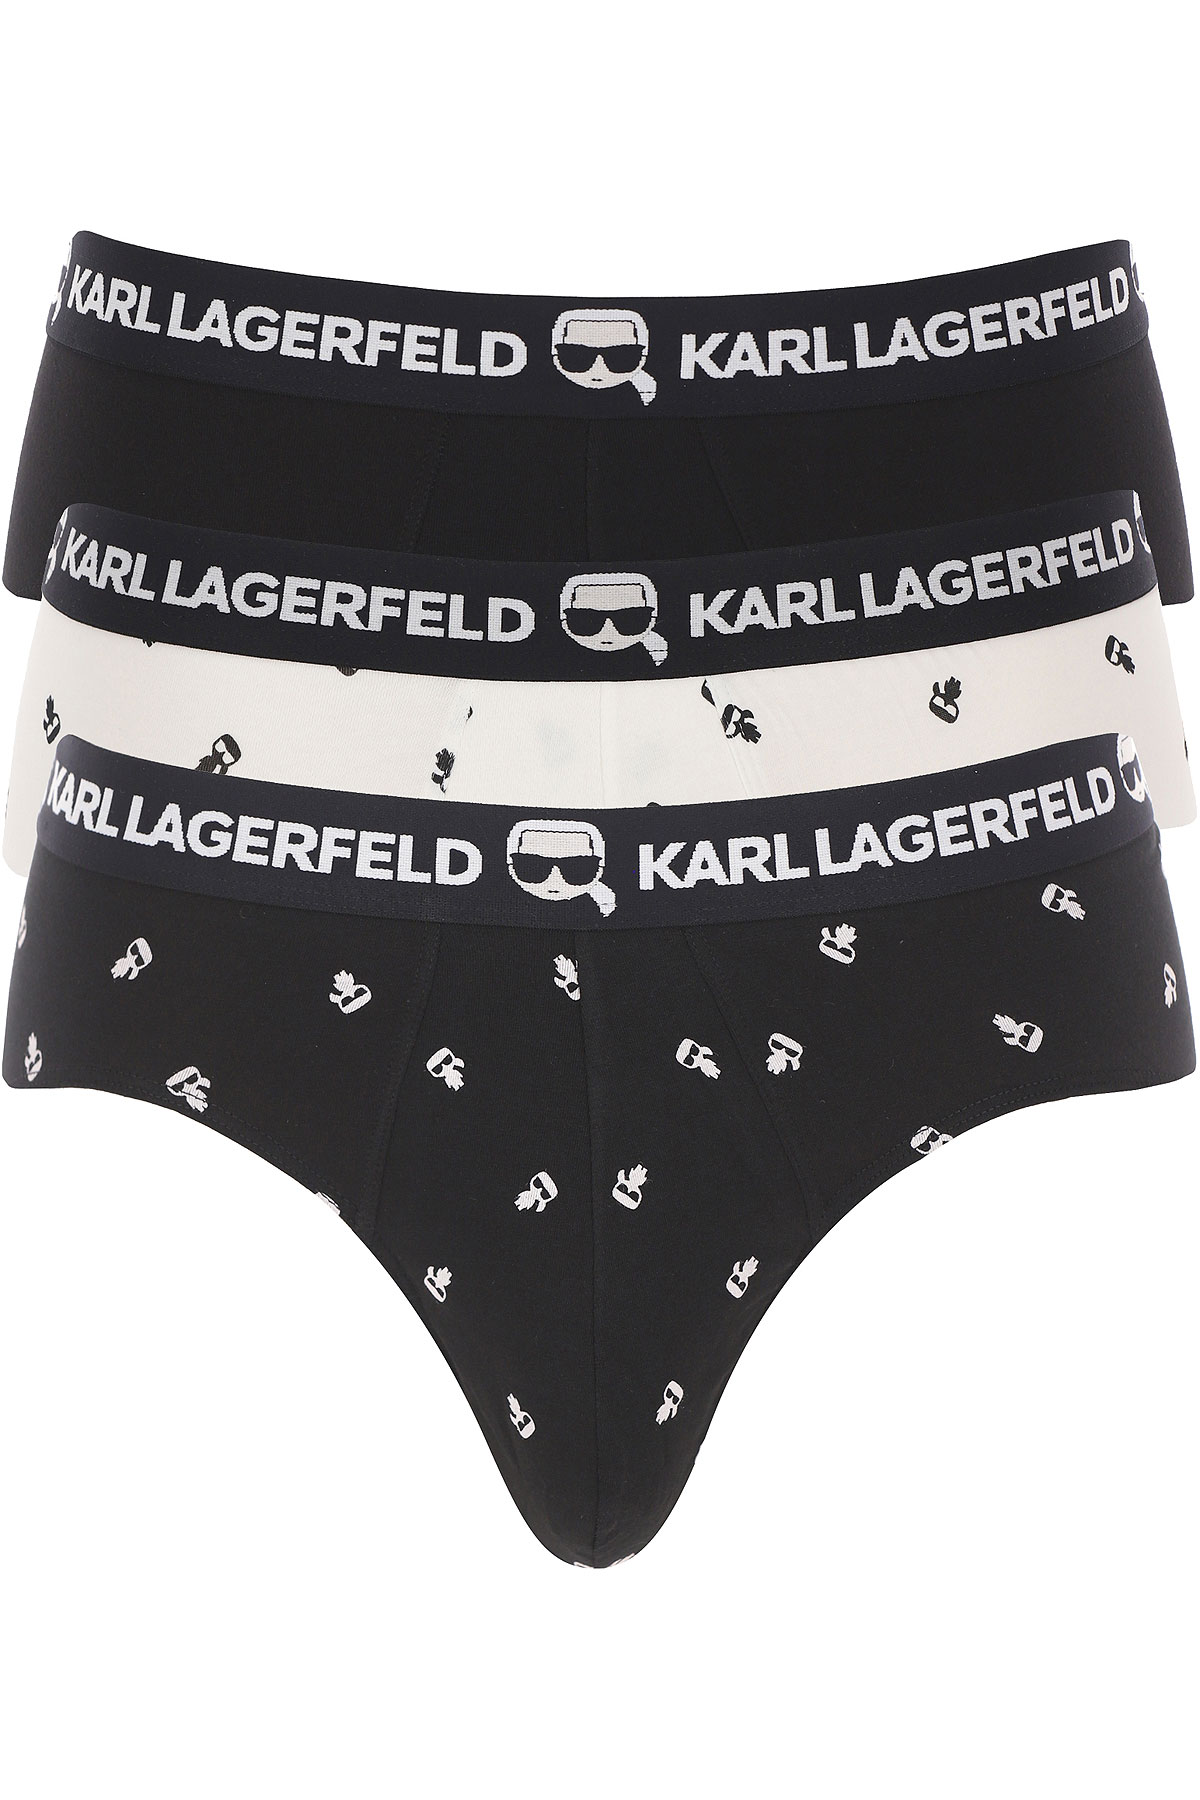 vals links Dosering Mens Underwear Karl Lagerfeld, Style code: 220m2116-900-